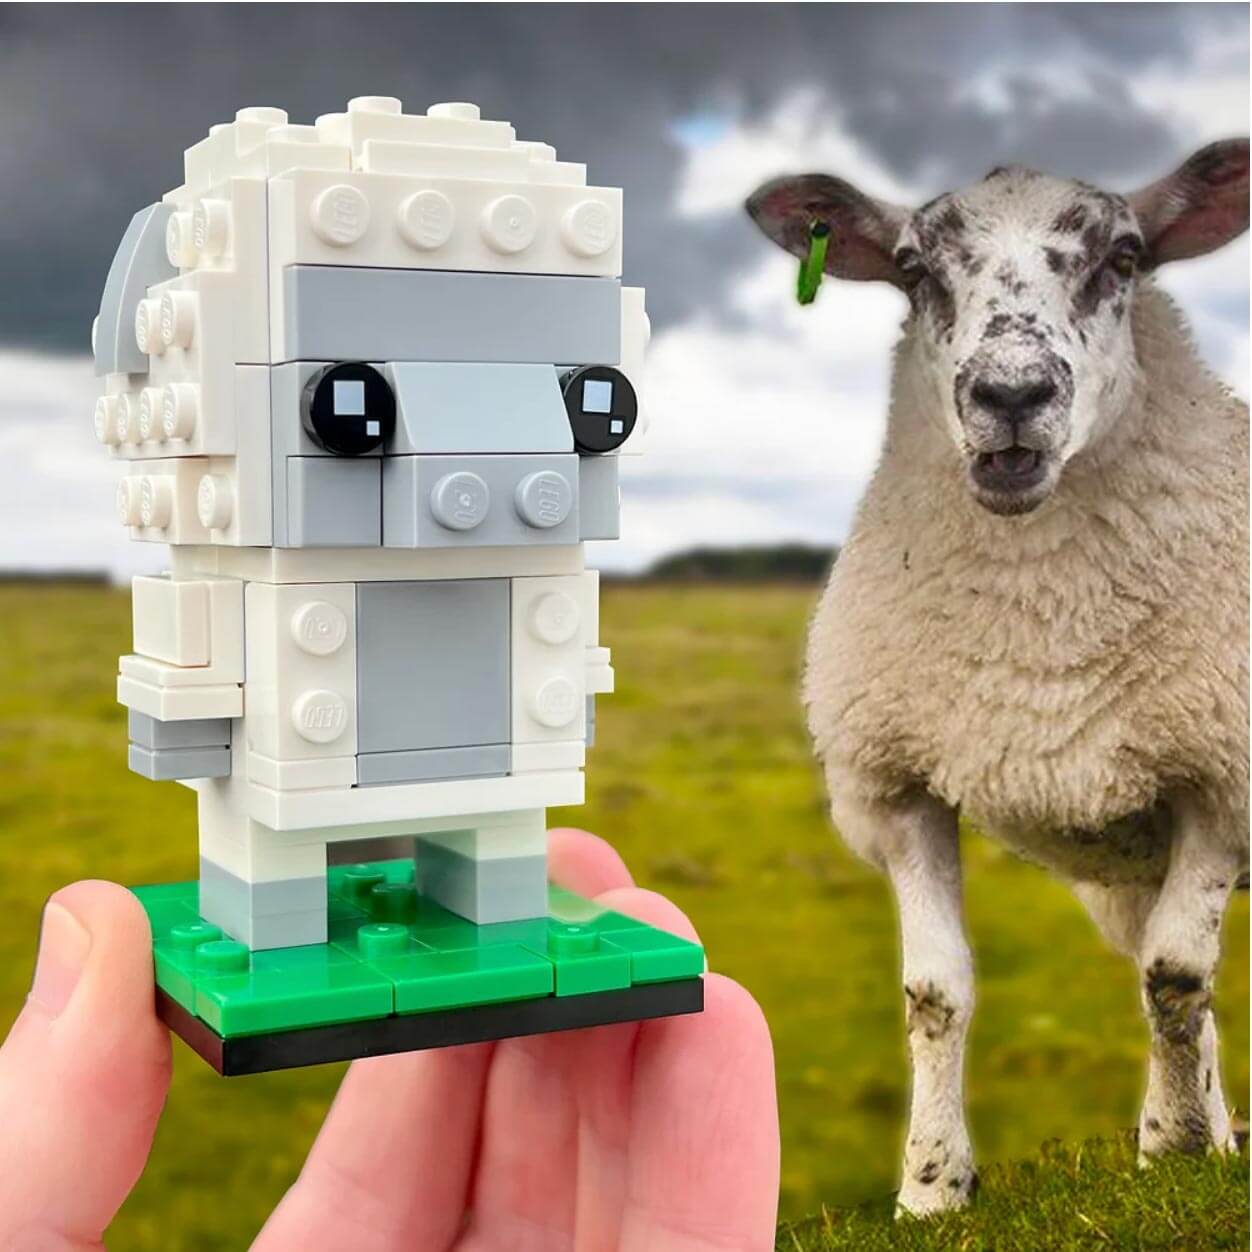 Brick Set - Cyrmu Bricks - Build Your Own: Welsh Sheep